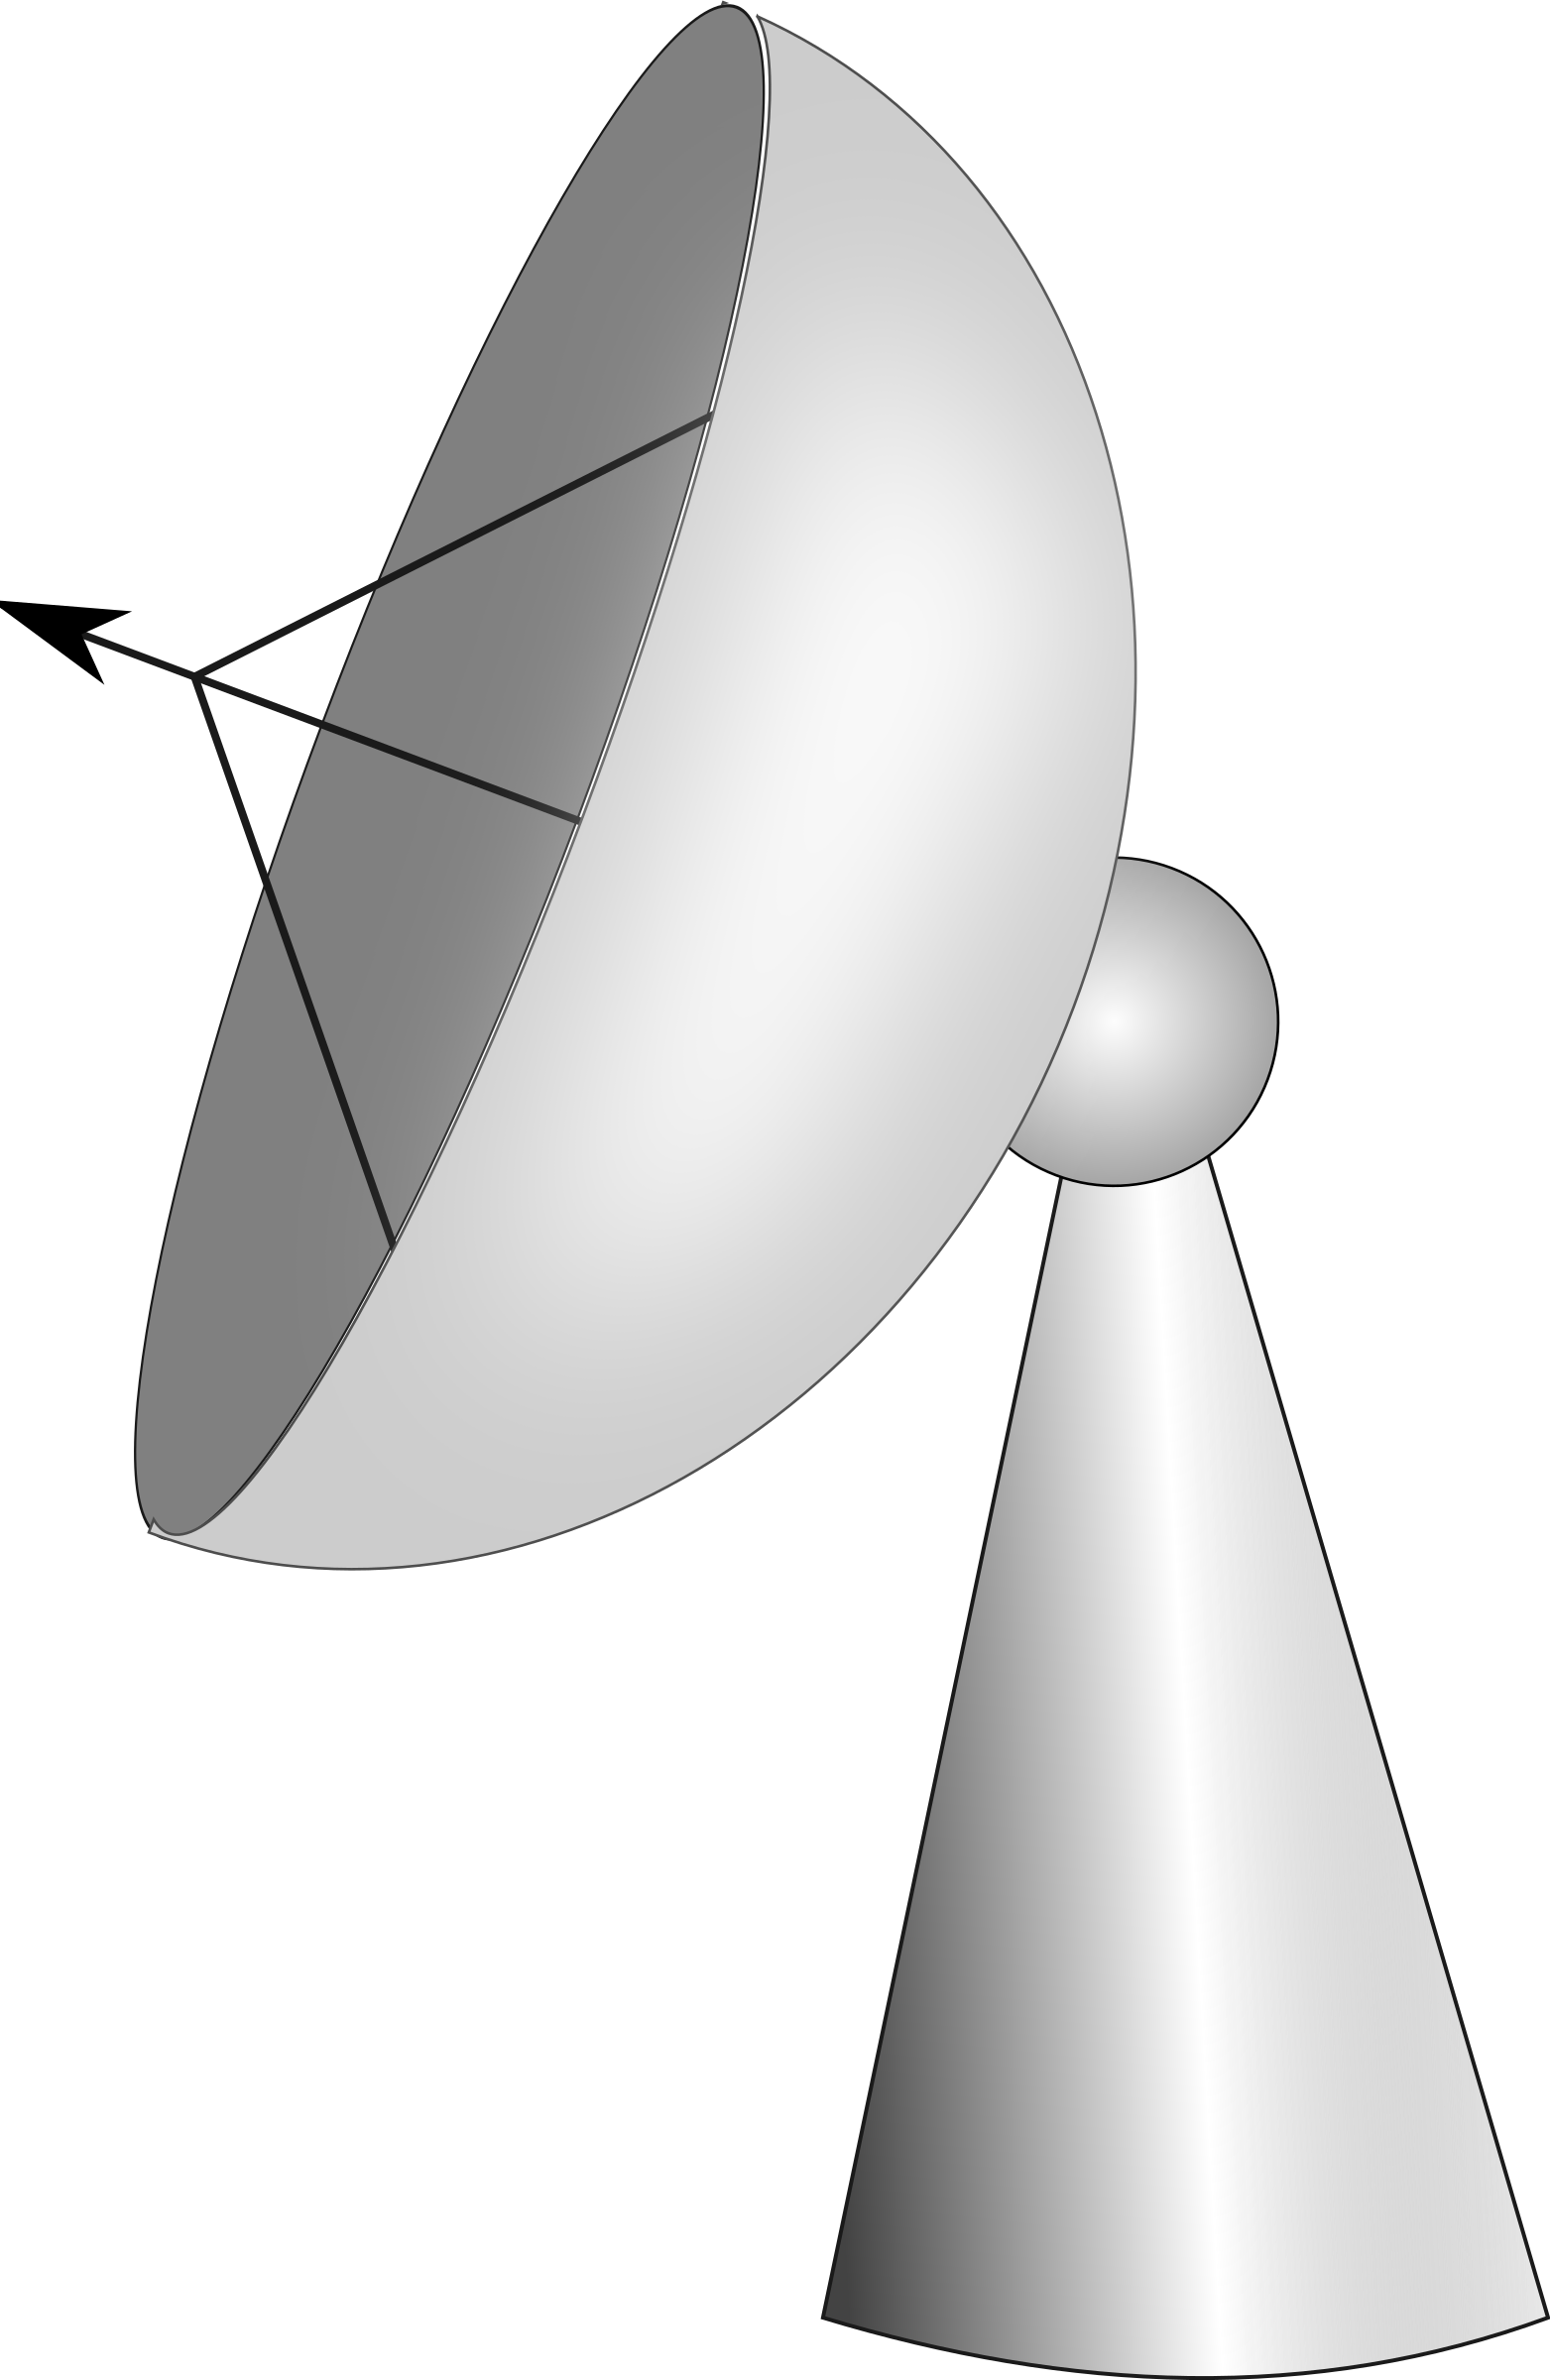 radio telescope clipart - photo #9